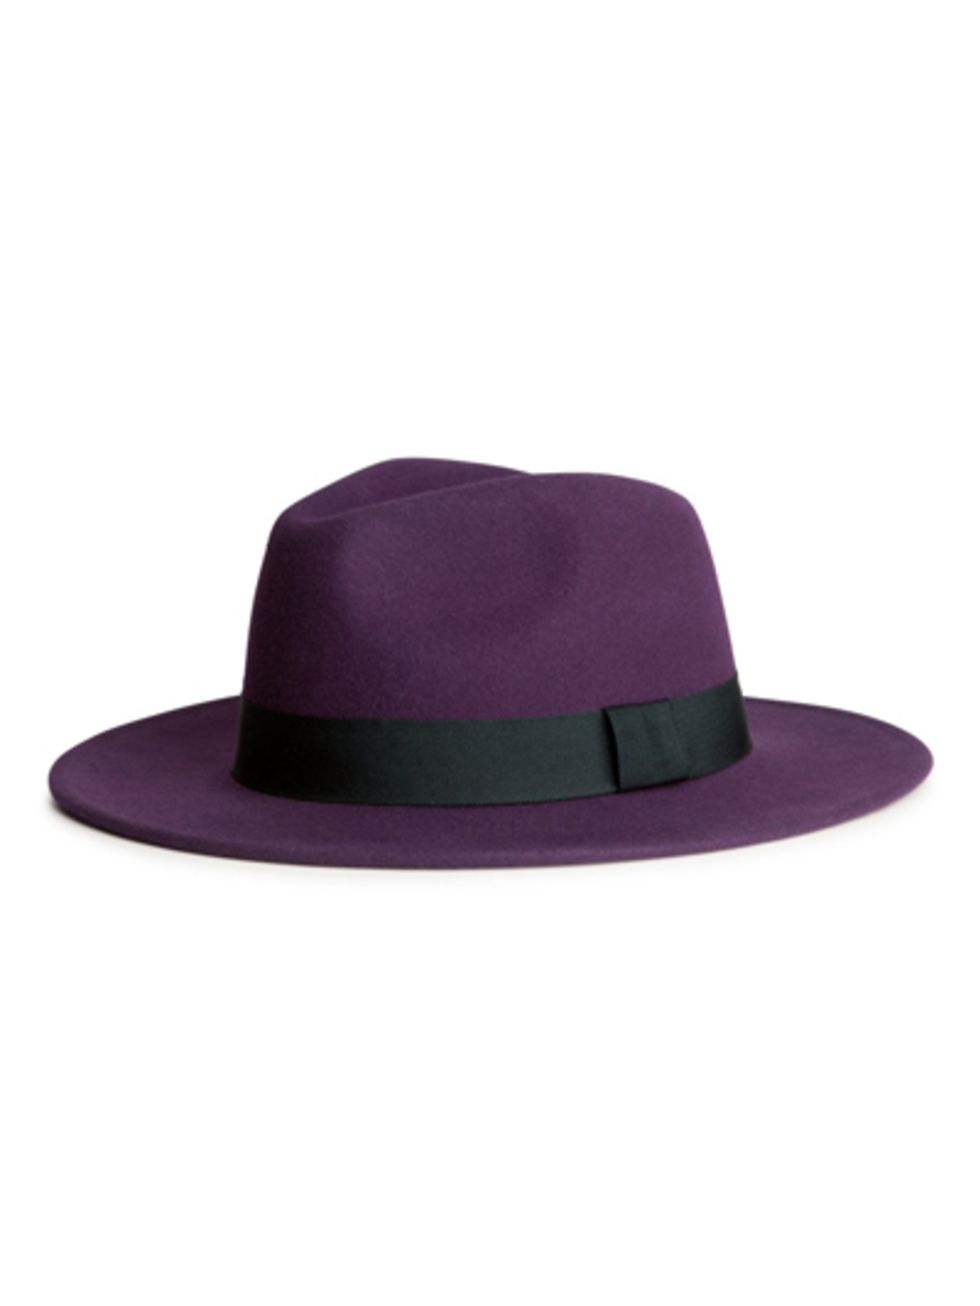 Hat, Purple, Violet, Magenta, Headgear, Costume accessory, Maroon, Beige, Costume hat, Fedora, 